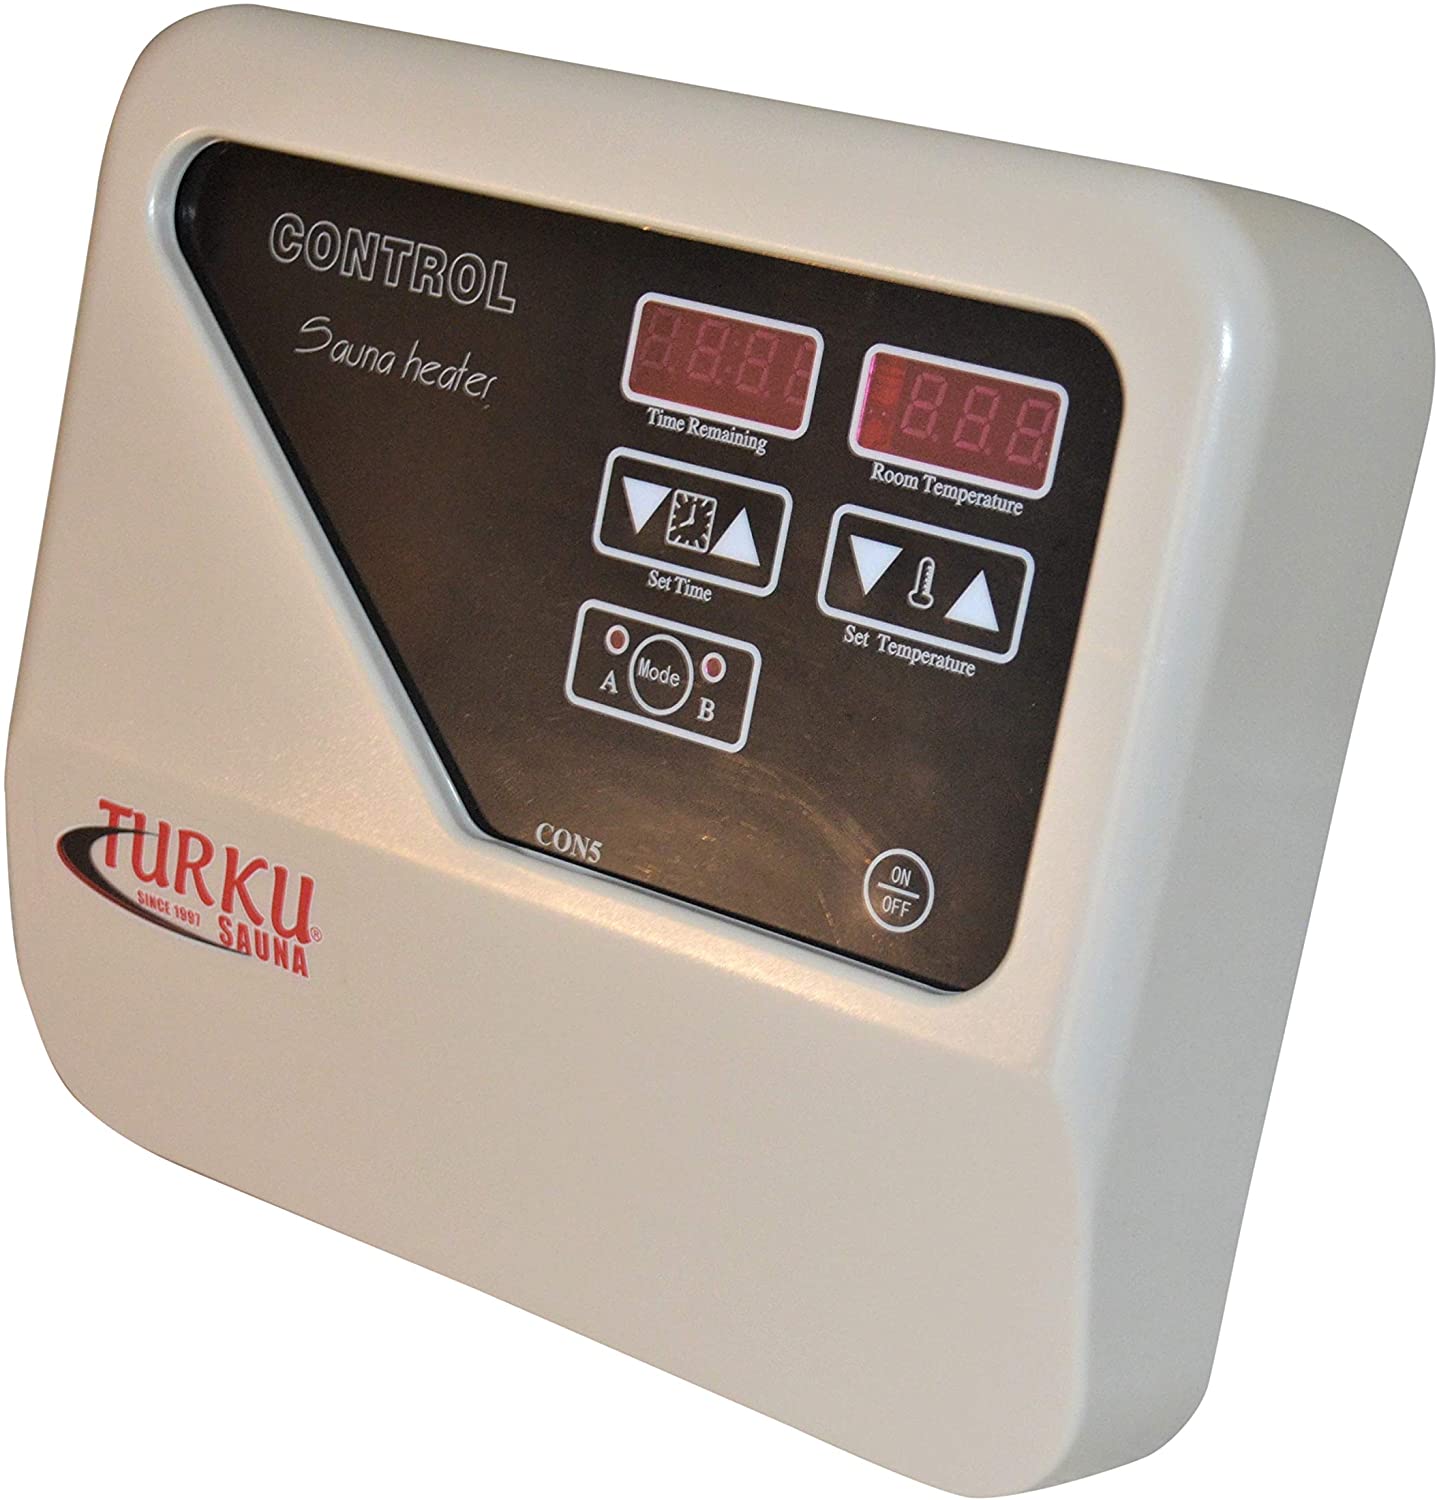 Saunahaus Garten Frisch Turku Sauna Heater Con5 Con 5 External Digital Controller with Electronic thermostat Sensor Patible with All Con4 and Con4us External Digital